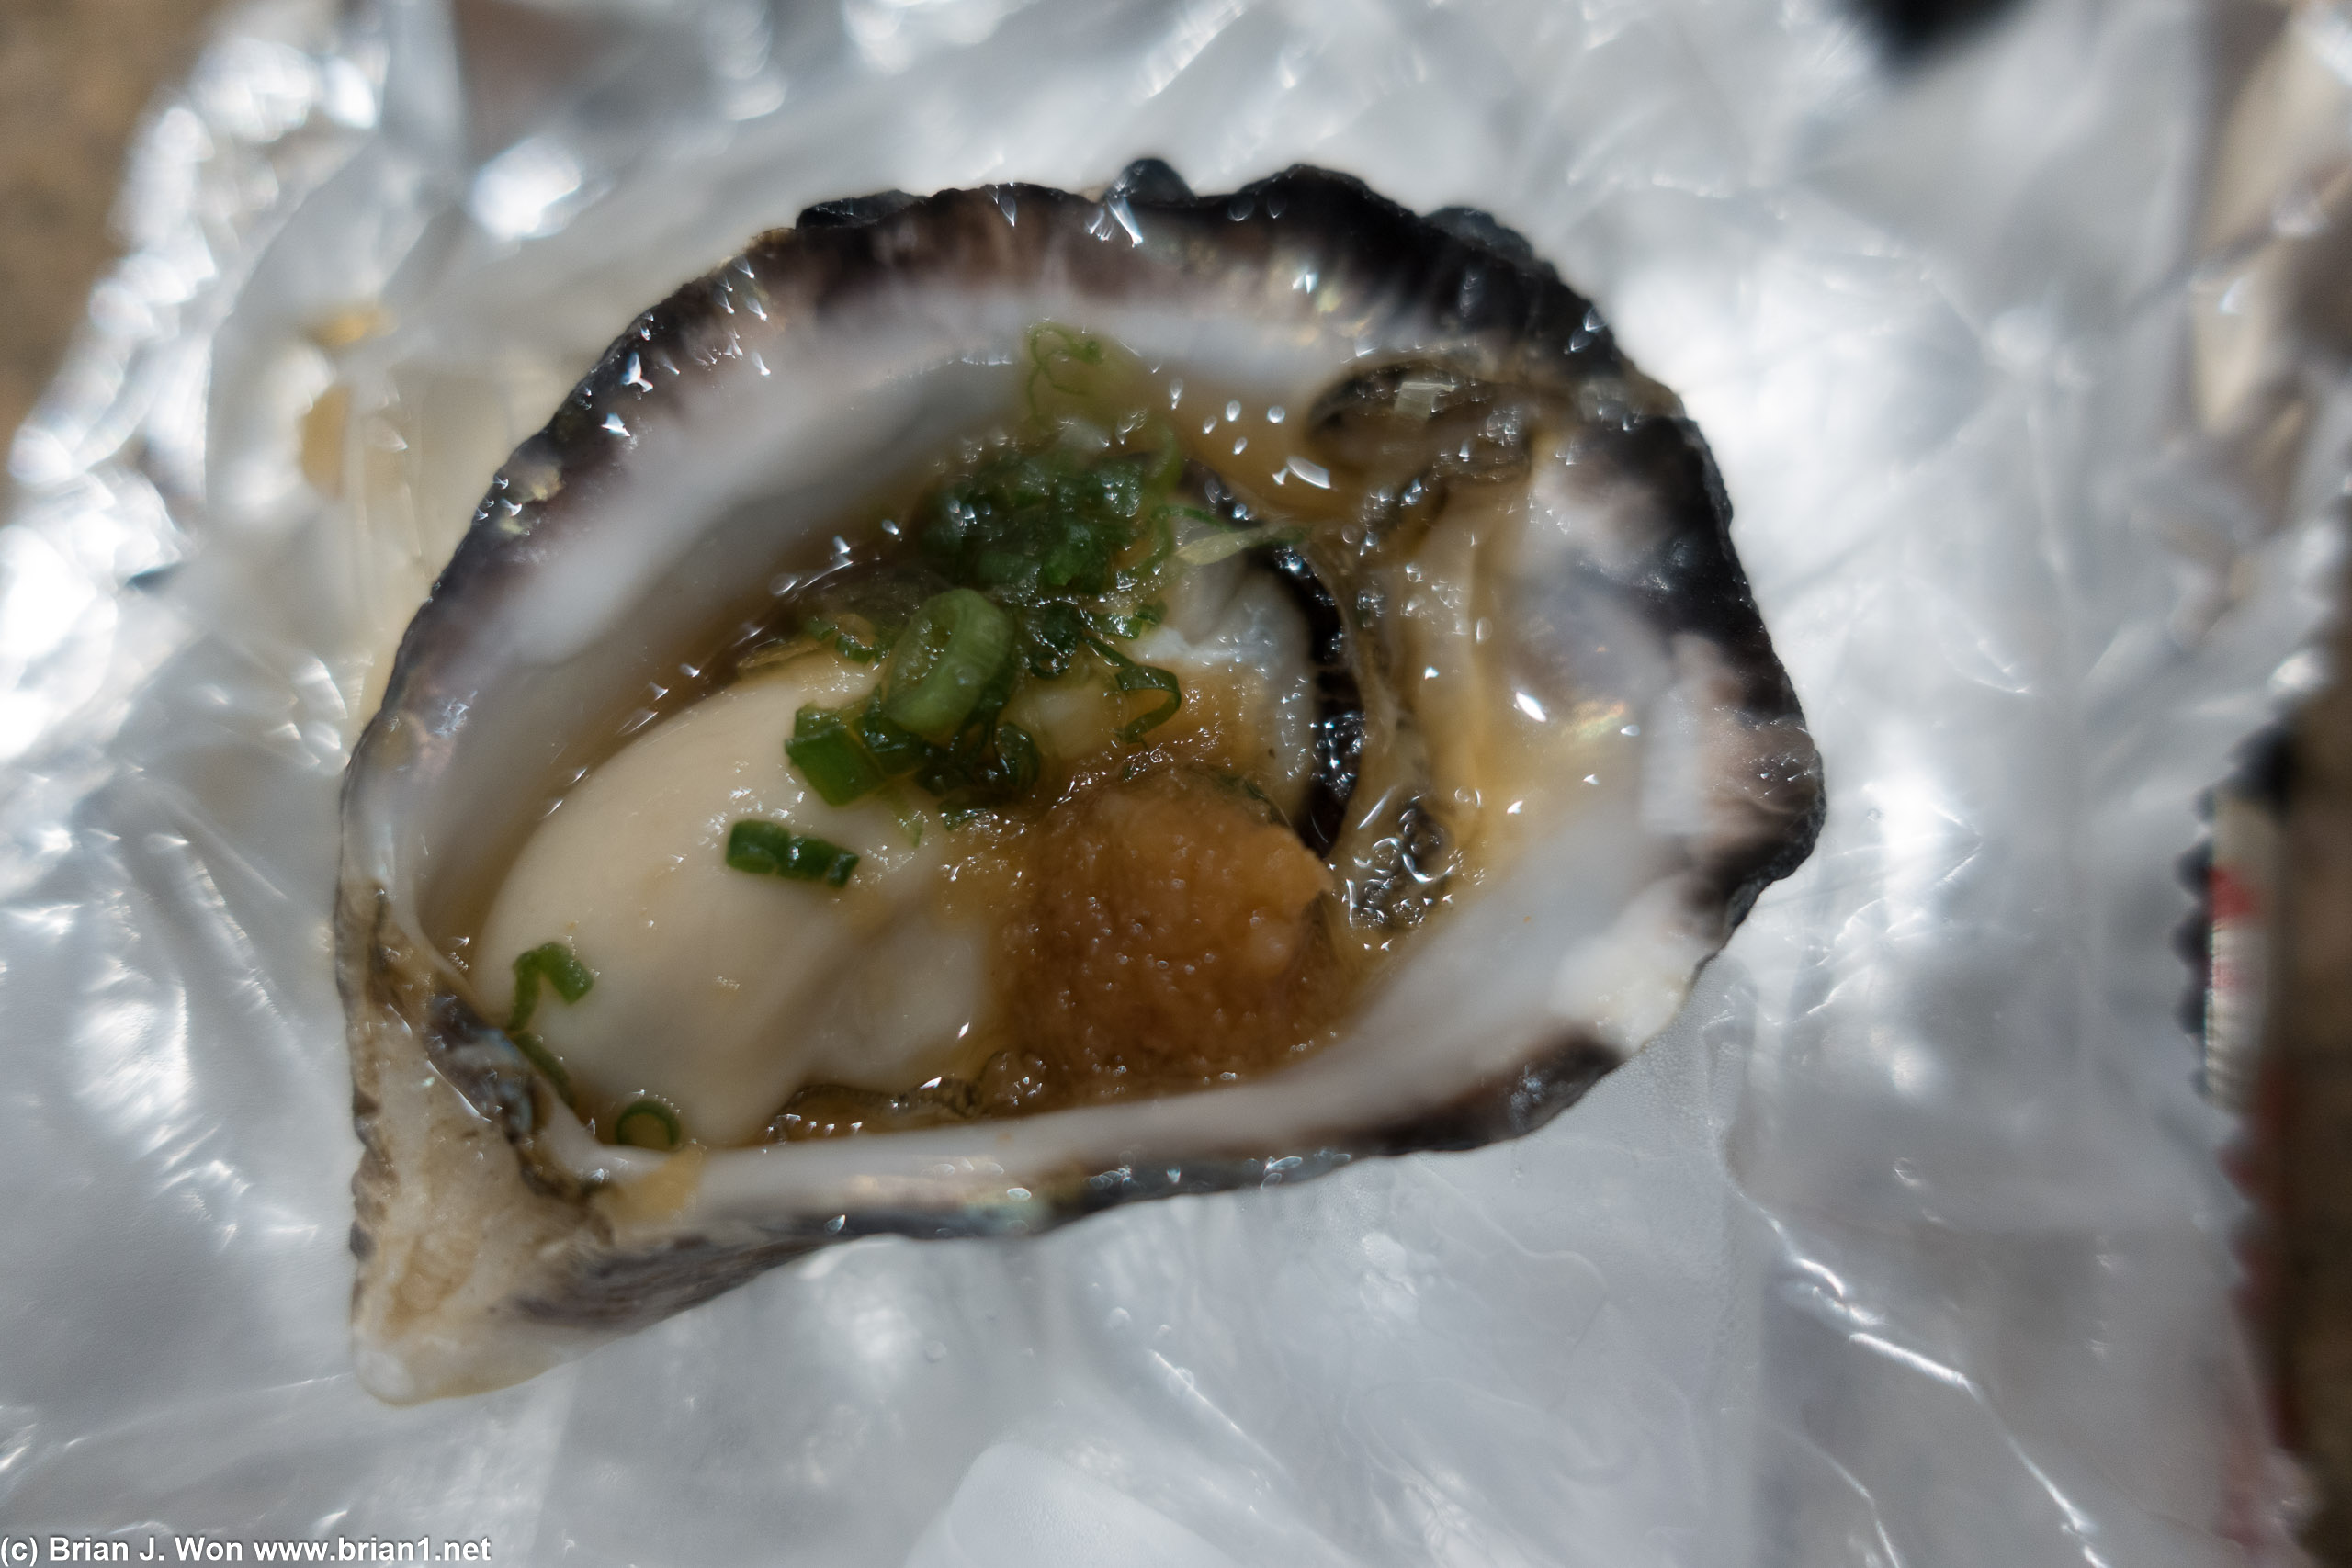 Raw oyster.